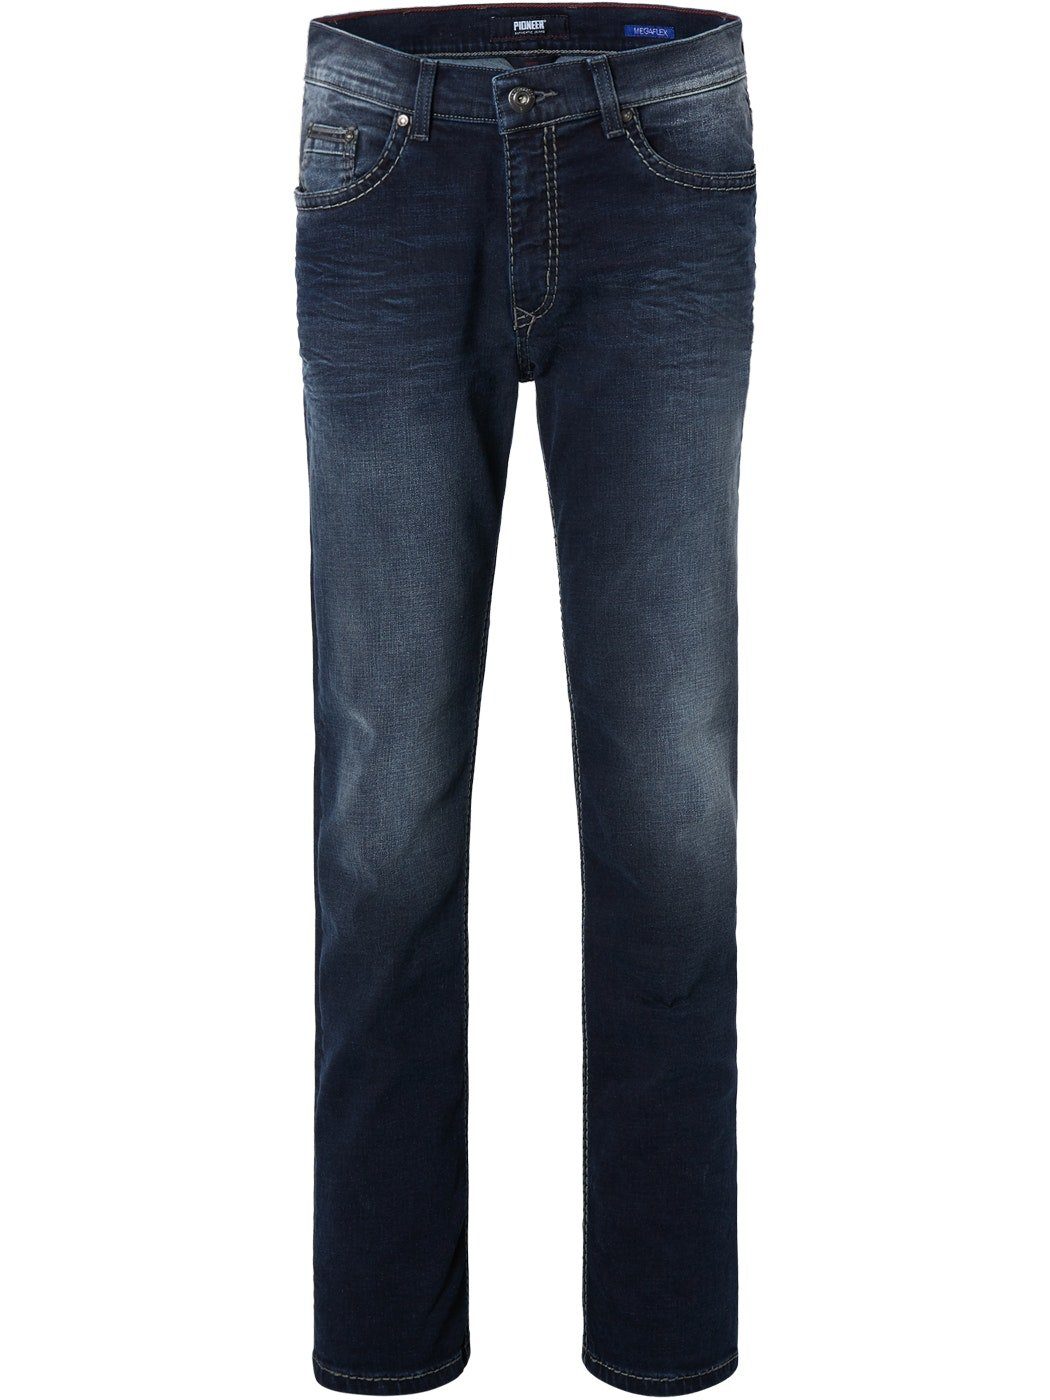 PIONEER RANDO MEGAFLEX Authentic 5-Pocket-Jeans used dark 1654 Jeans Pioneer 9740.475